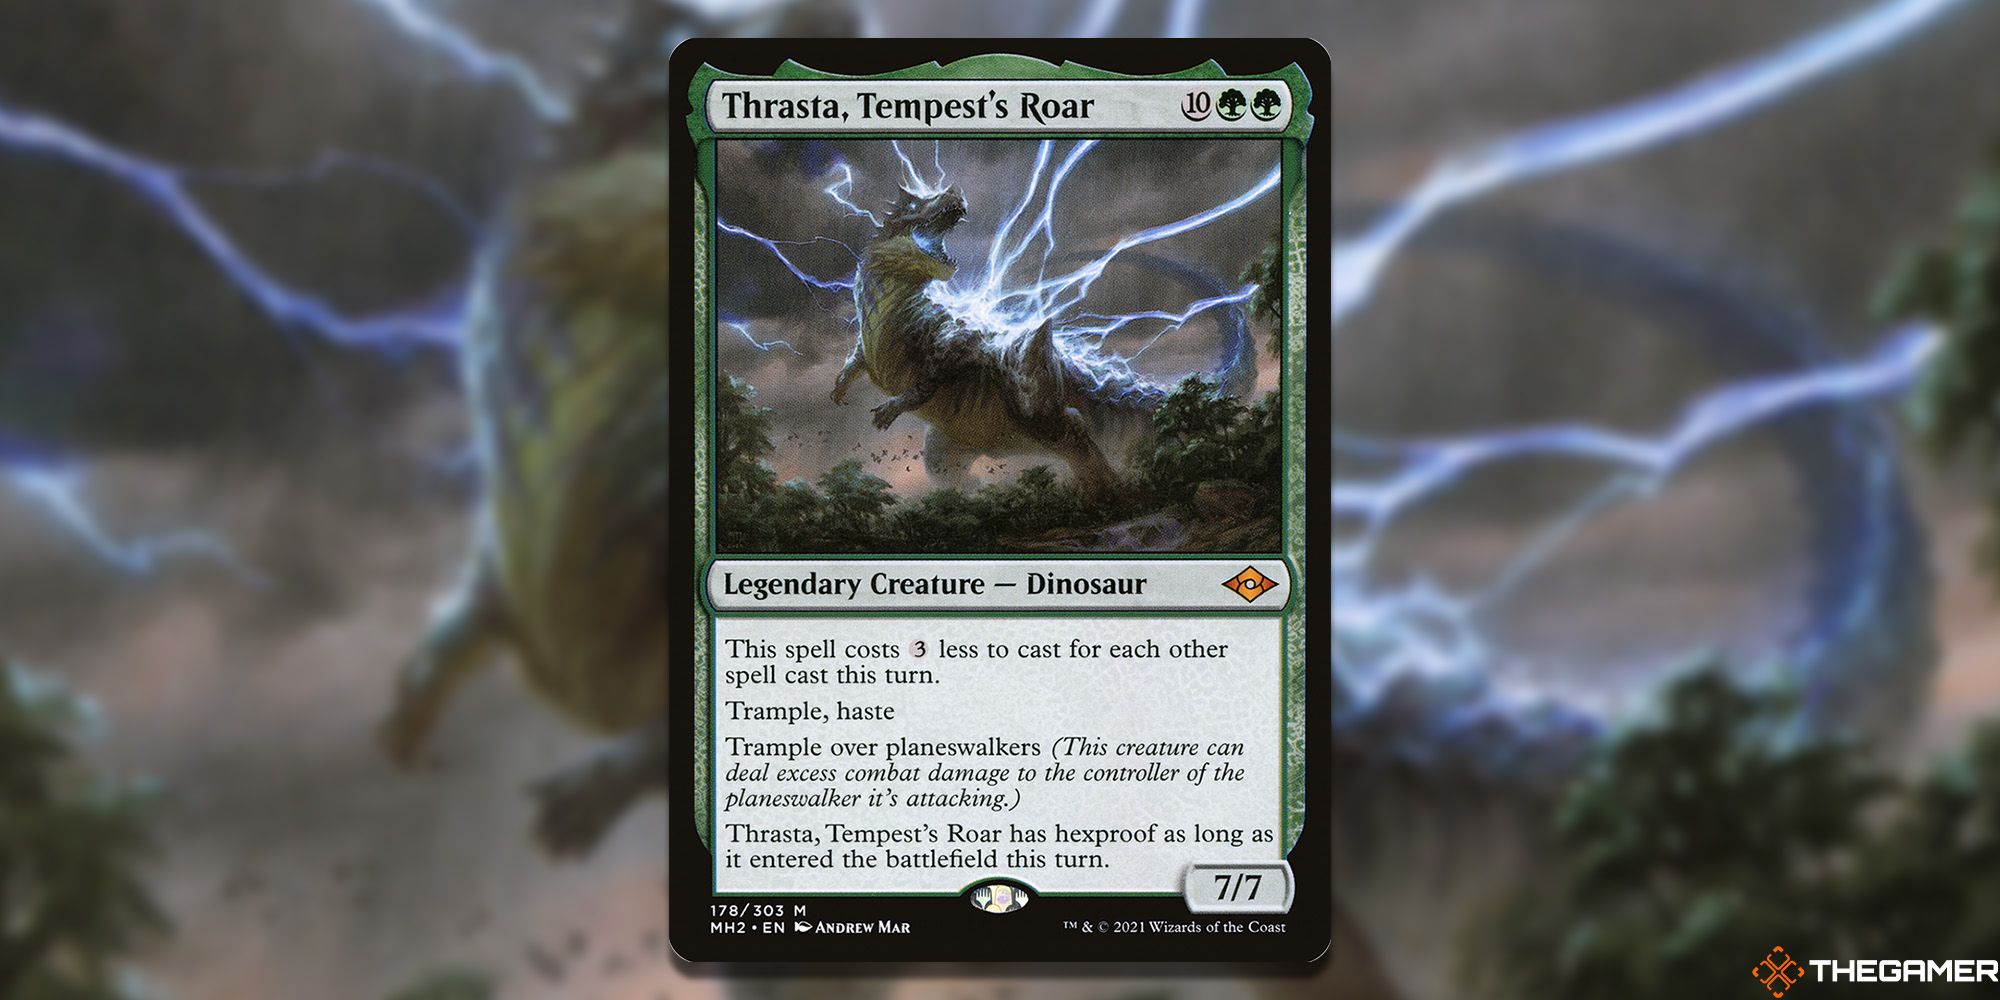 Thrasta, tempest's roar